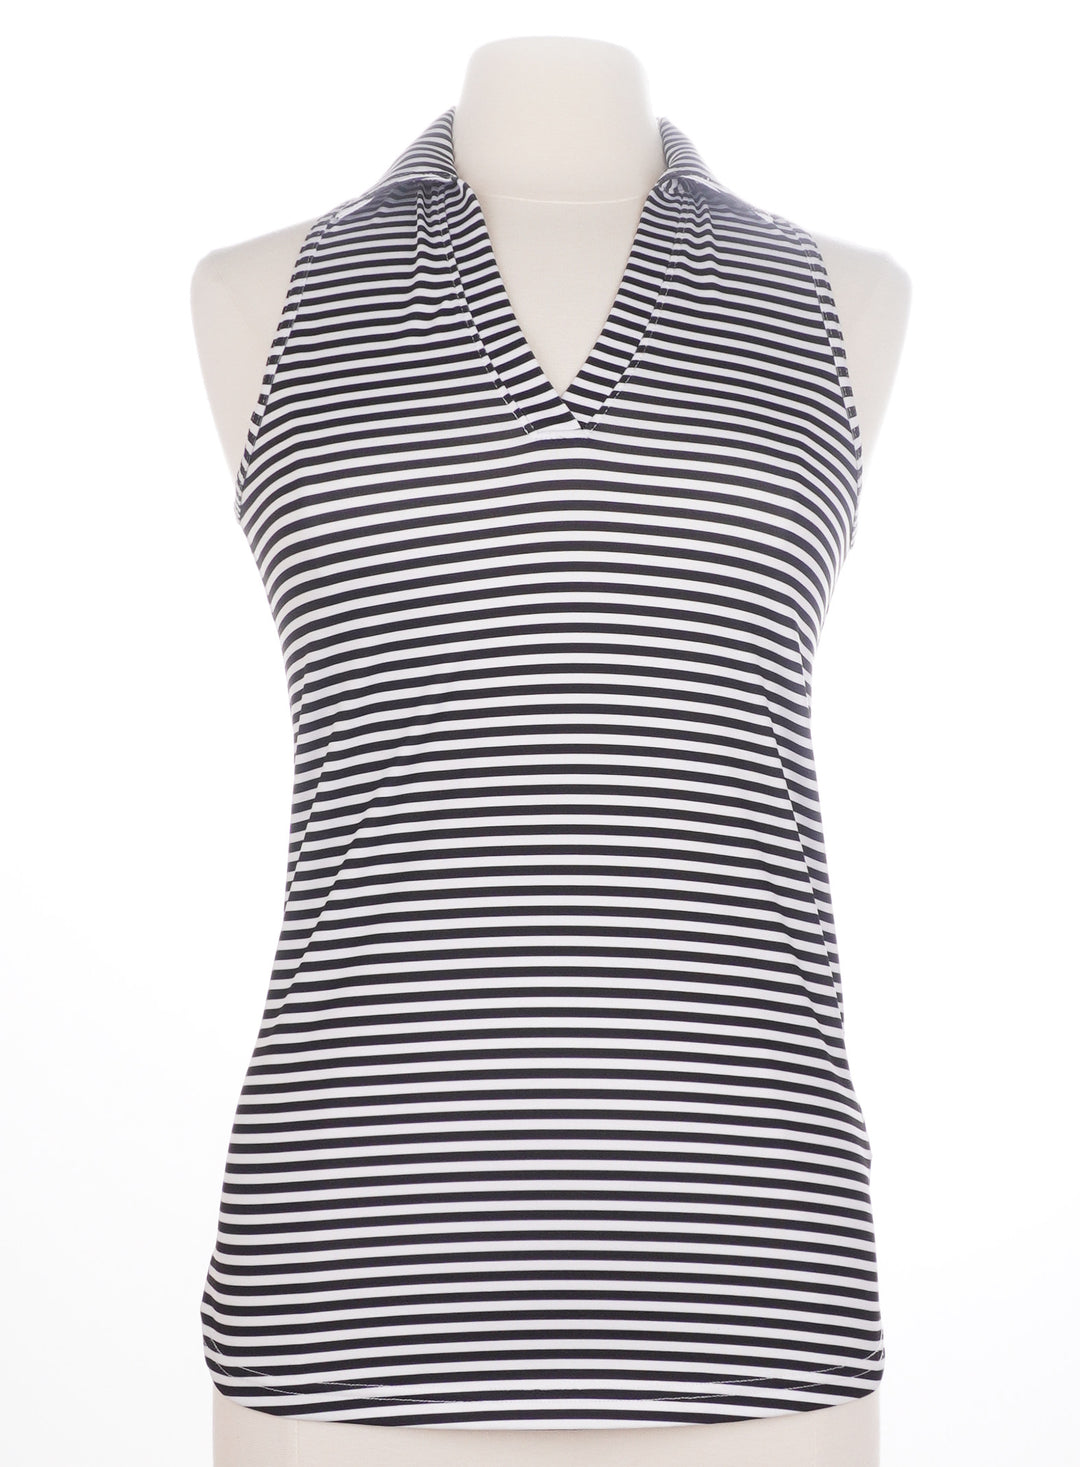 Jofit Black and White Stripe Sleeveless Top - Size Small - Skorzie